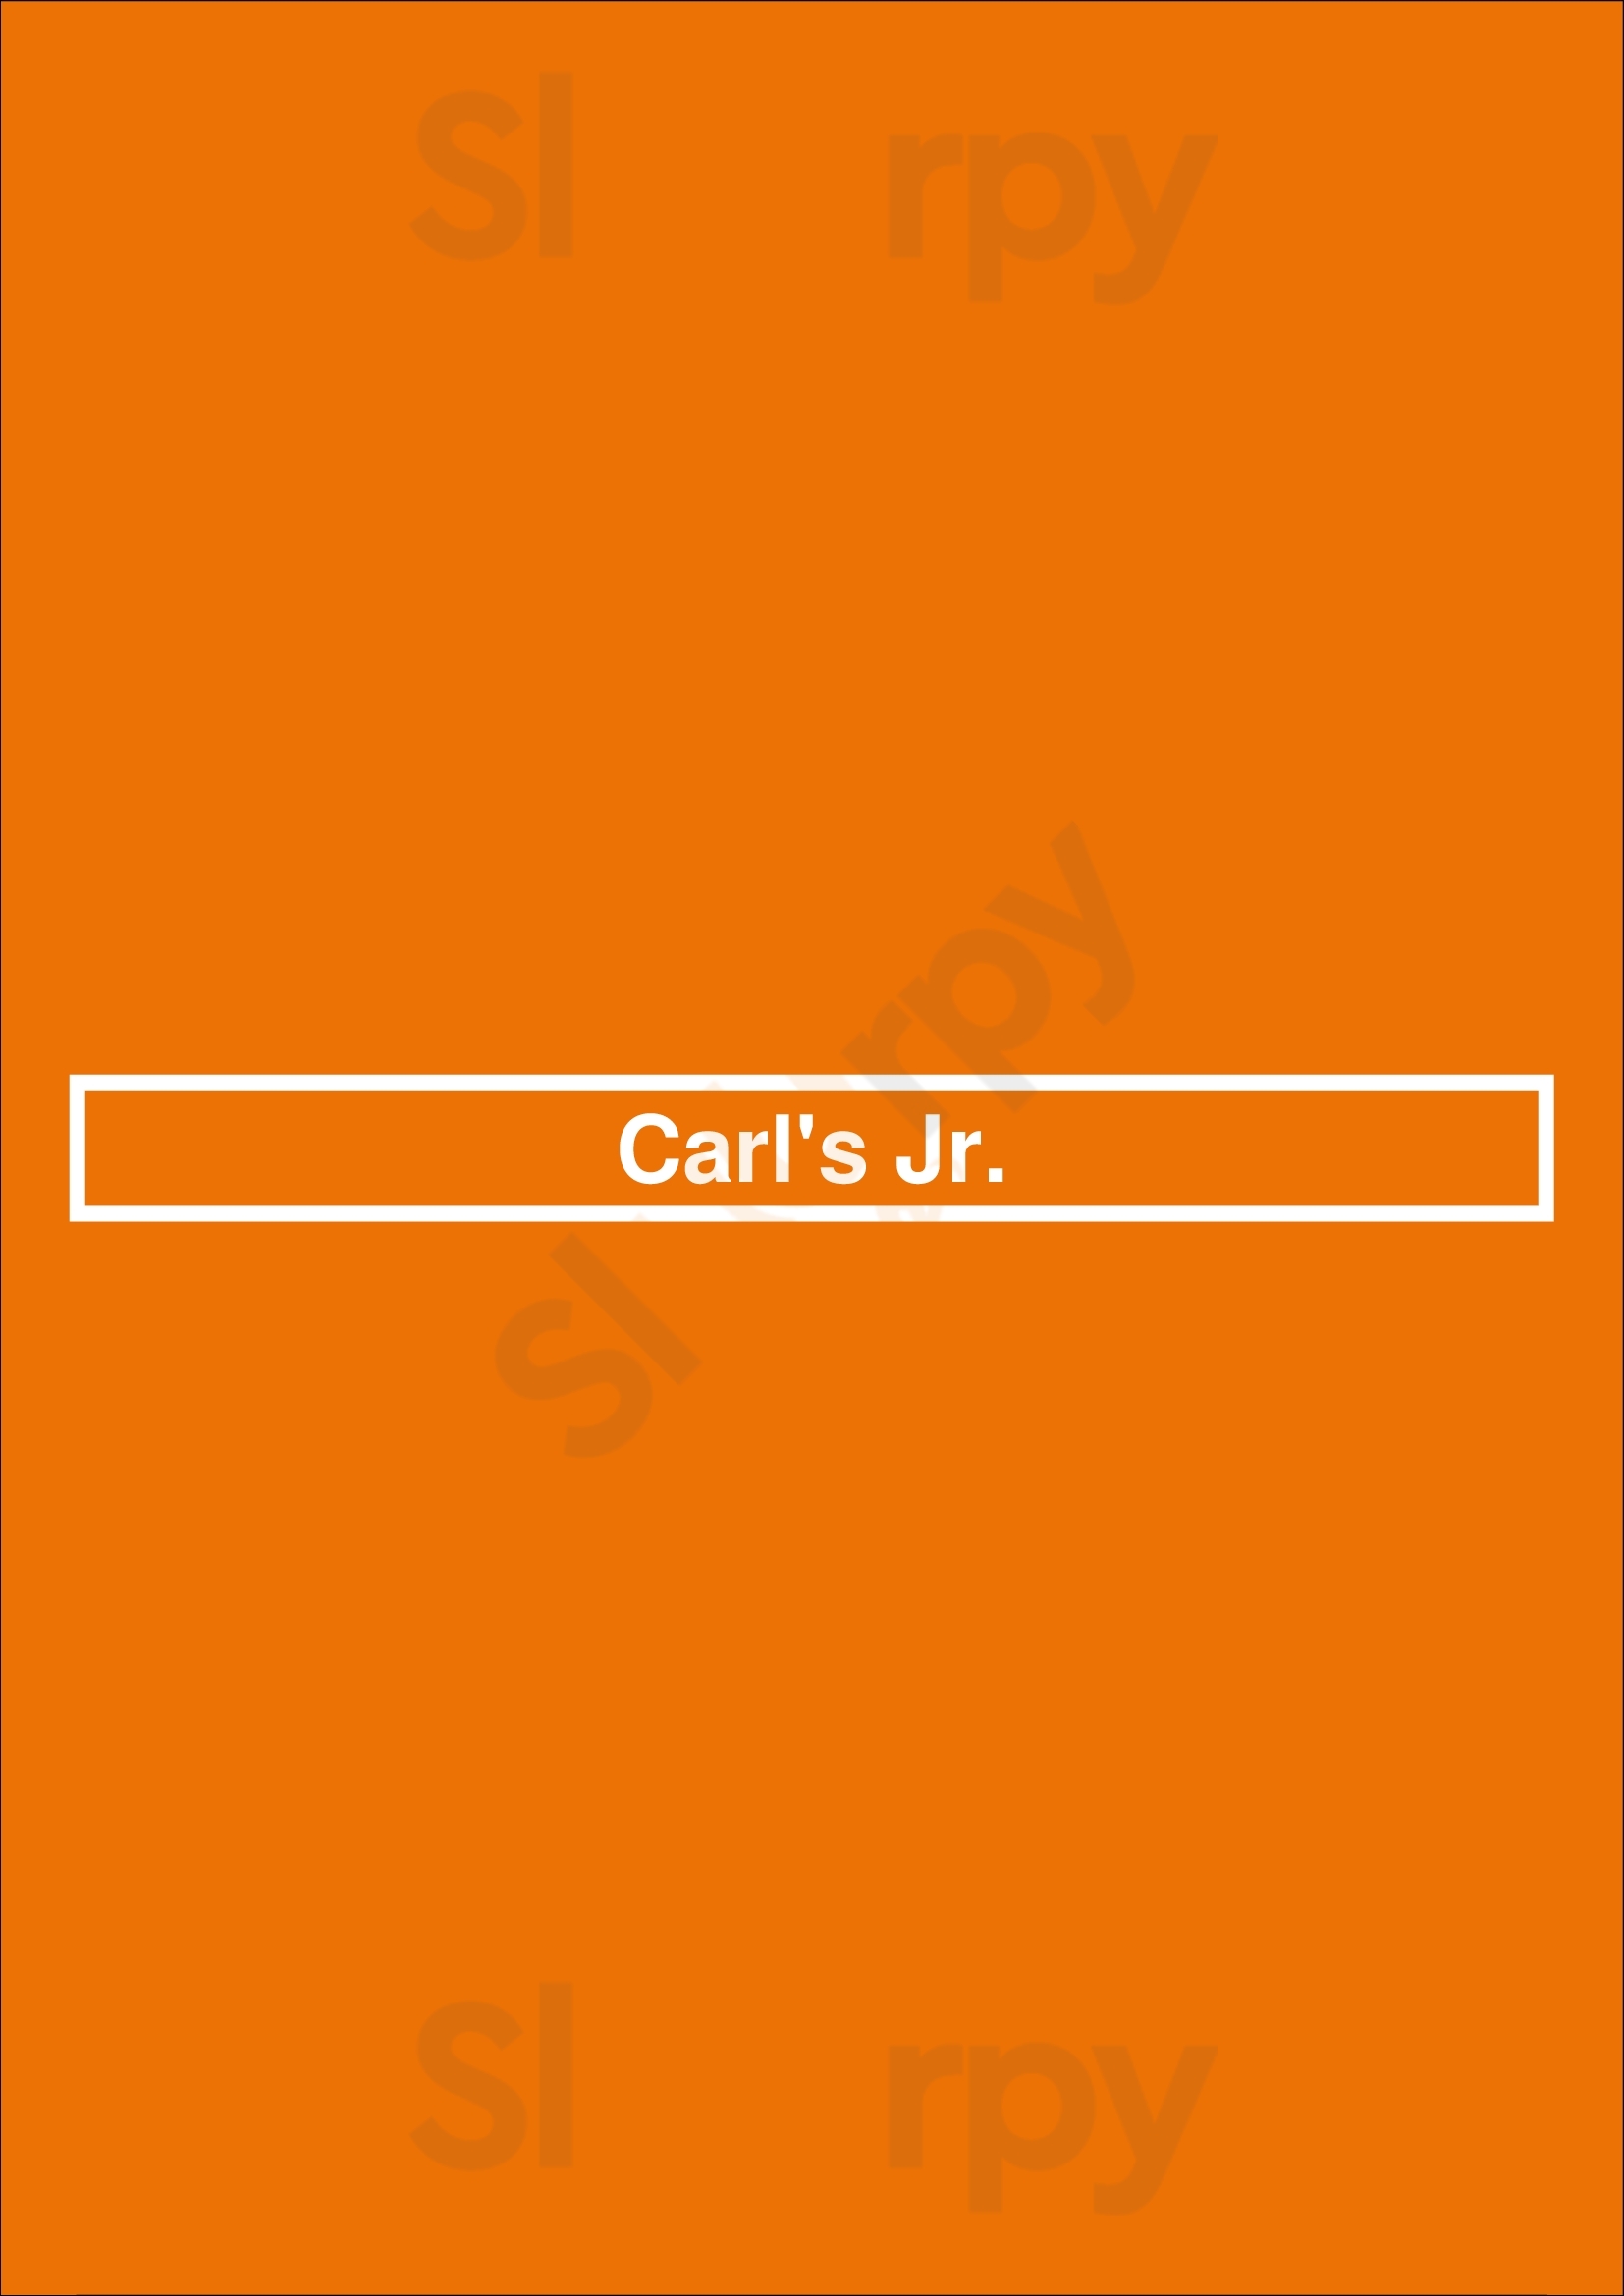 Carl's Jr. Scottsdale Menu - 1